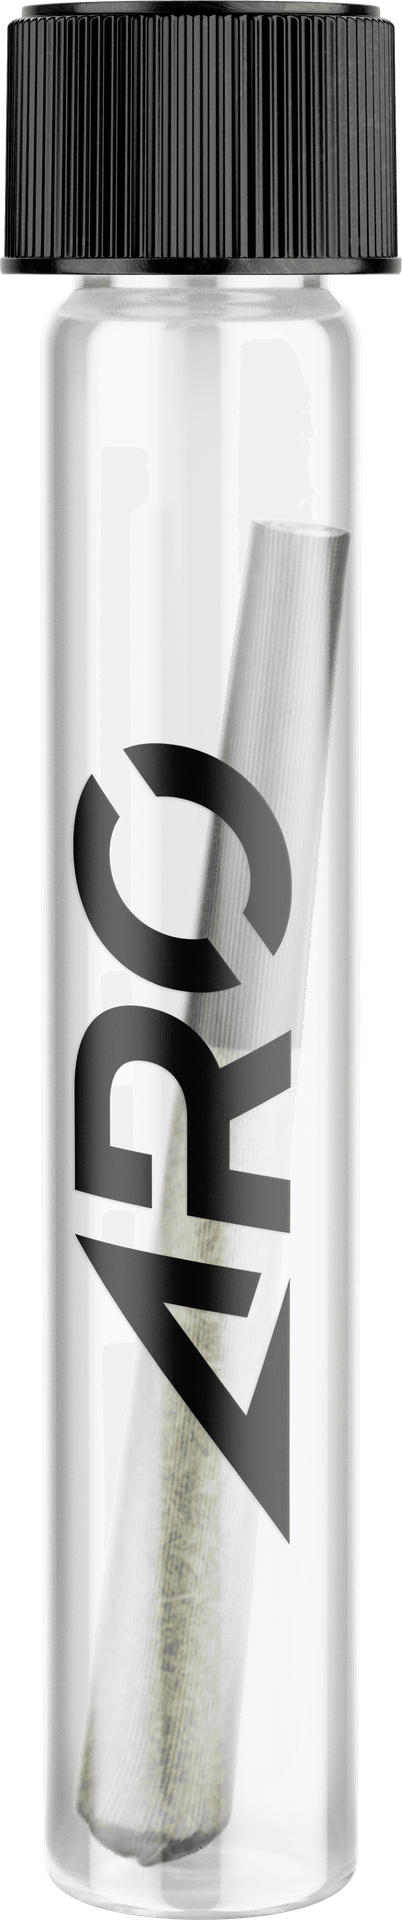 Glass pre roll tube with black cap ARO logo